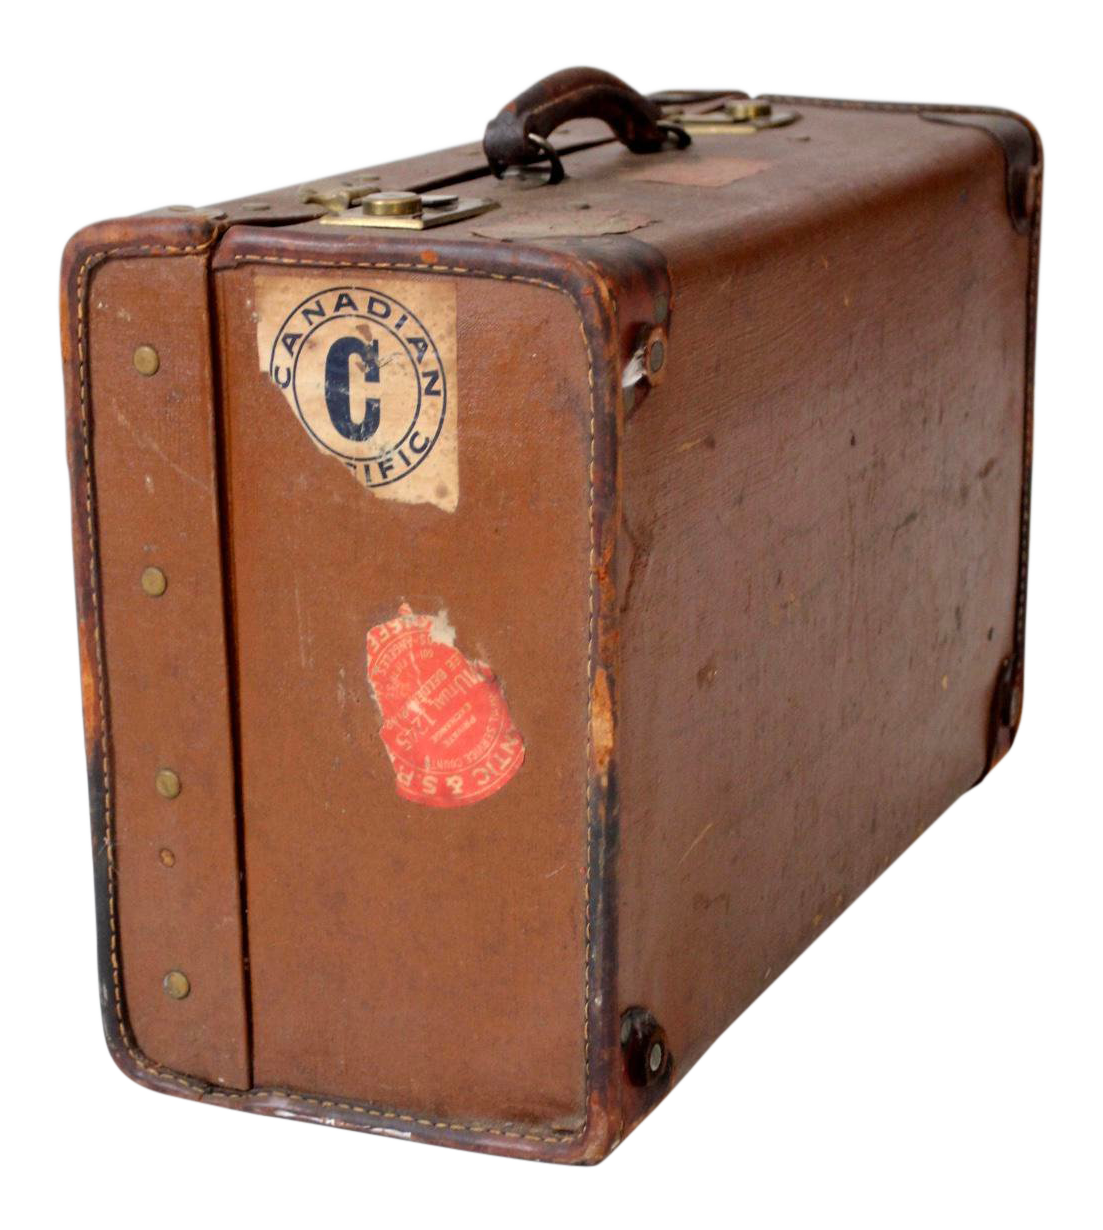 vintage suitcase for sale